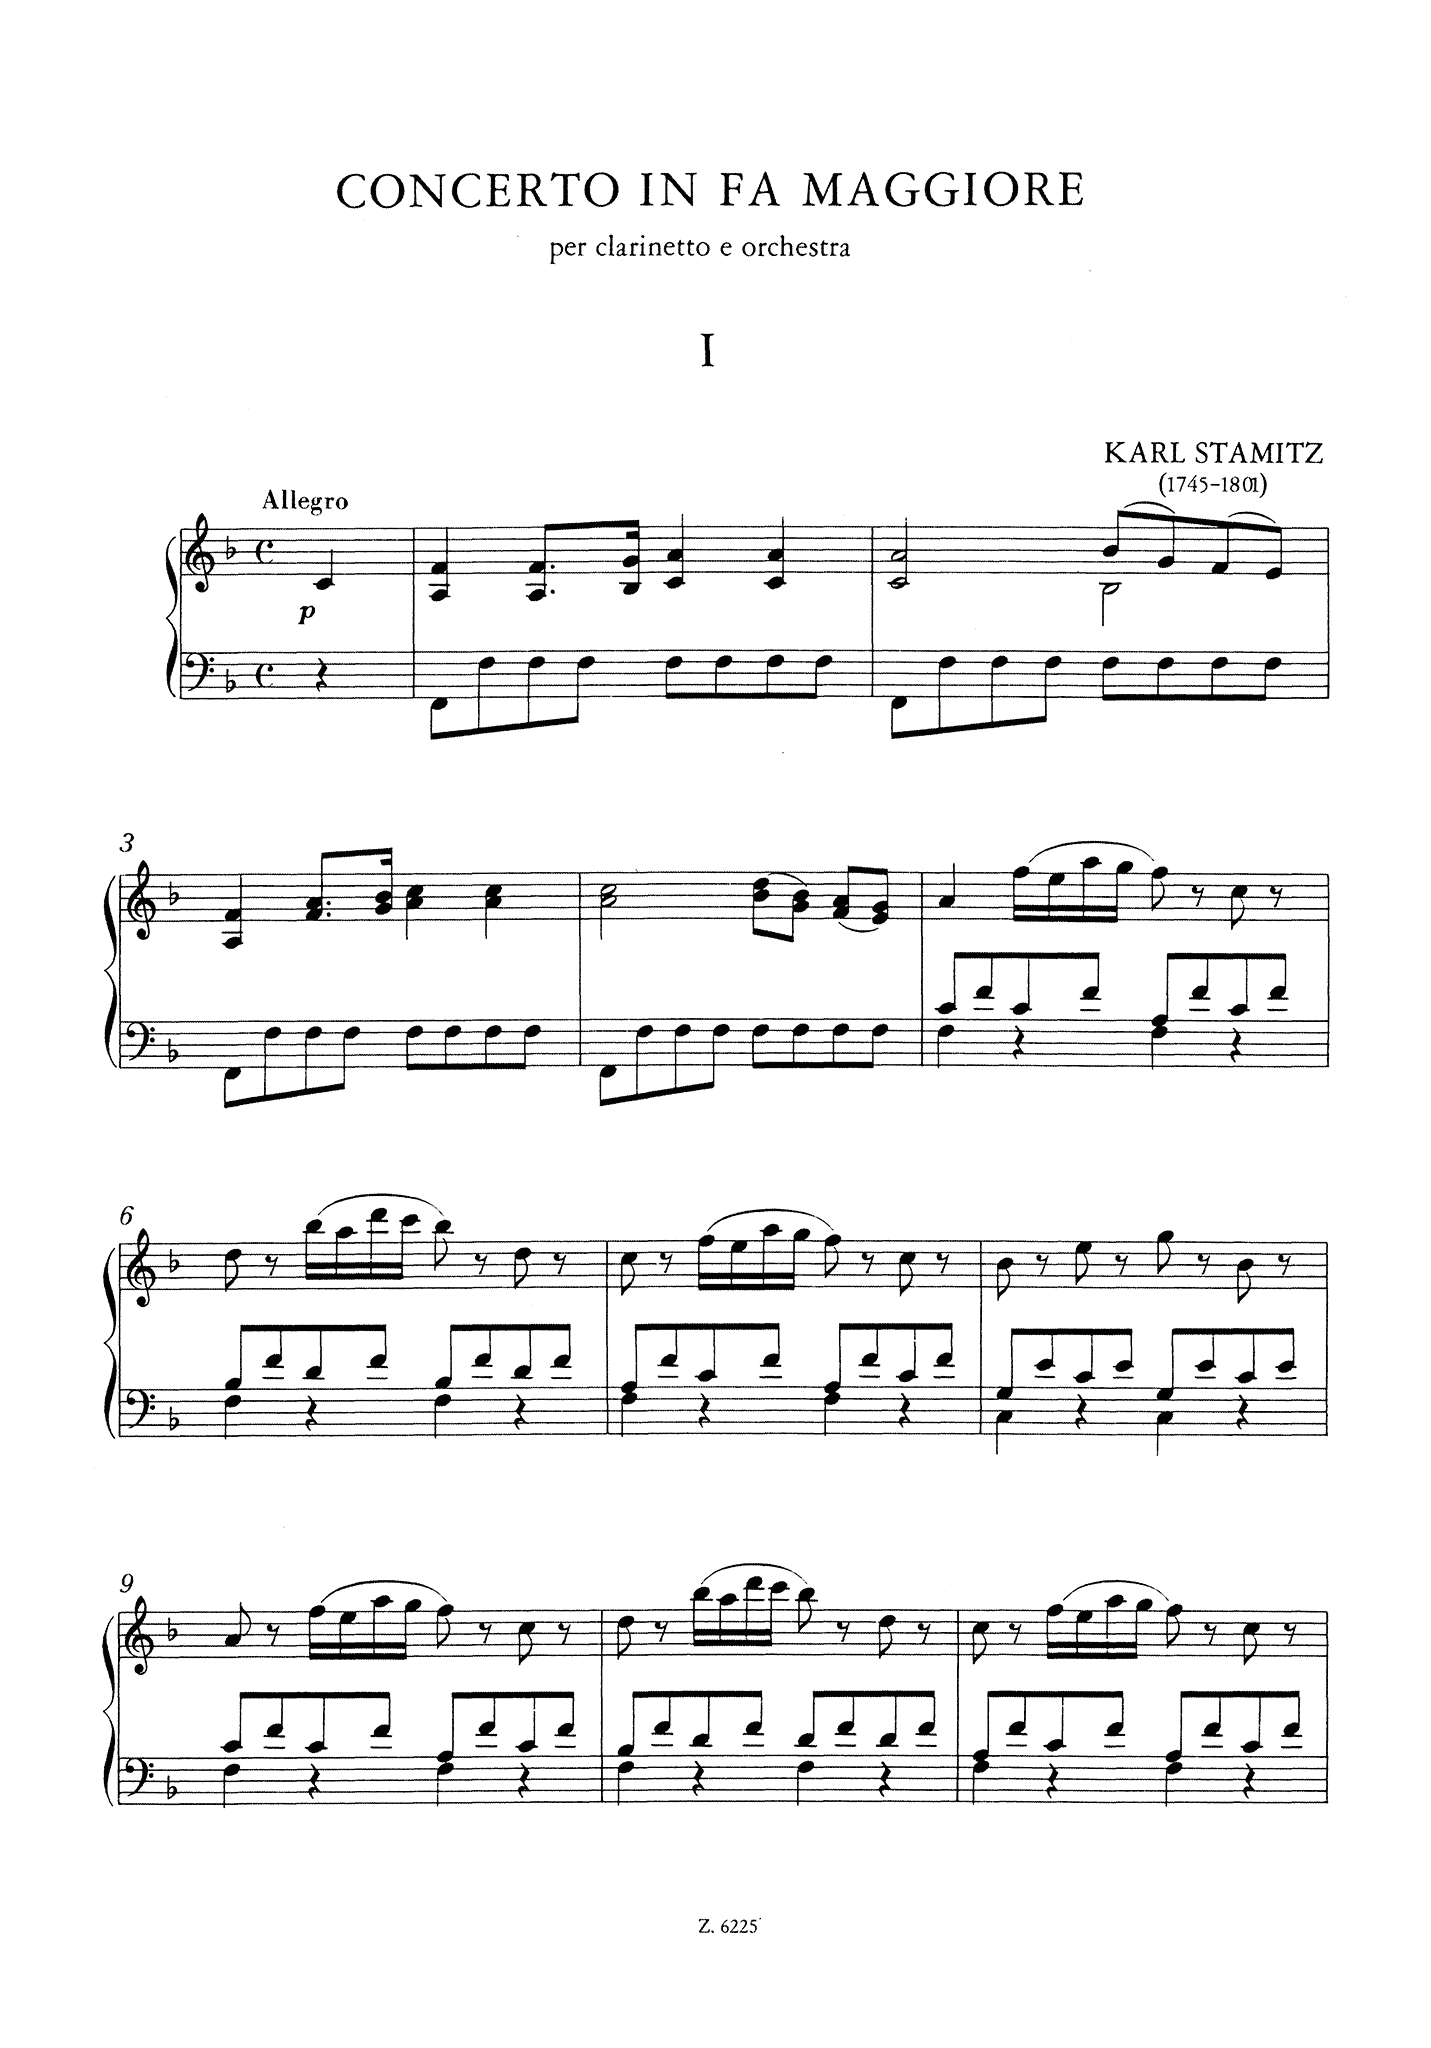 Clarinet Concerto No. 1 (Kaiser) in F Major - Movement 1